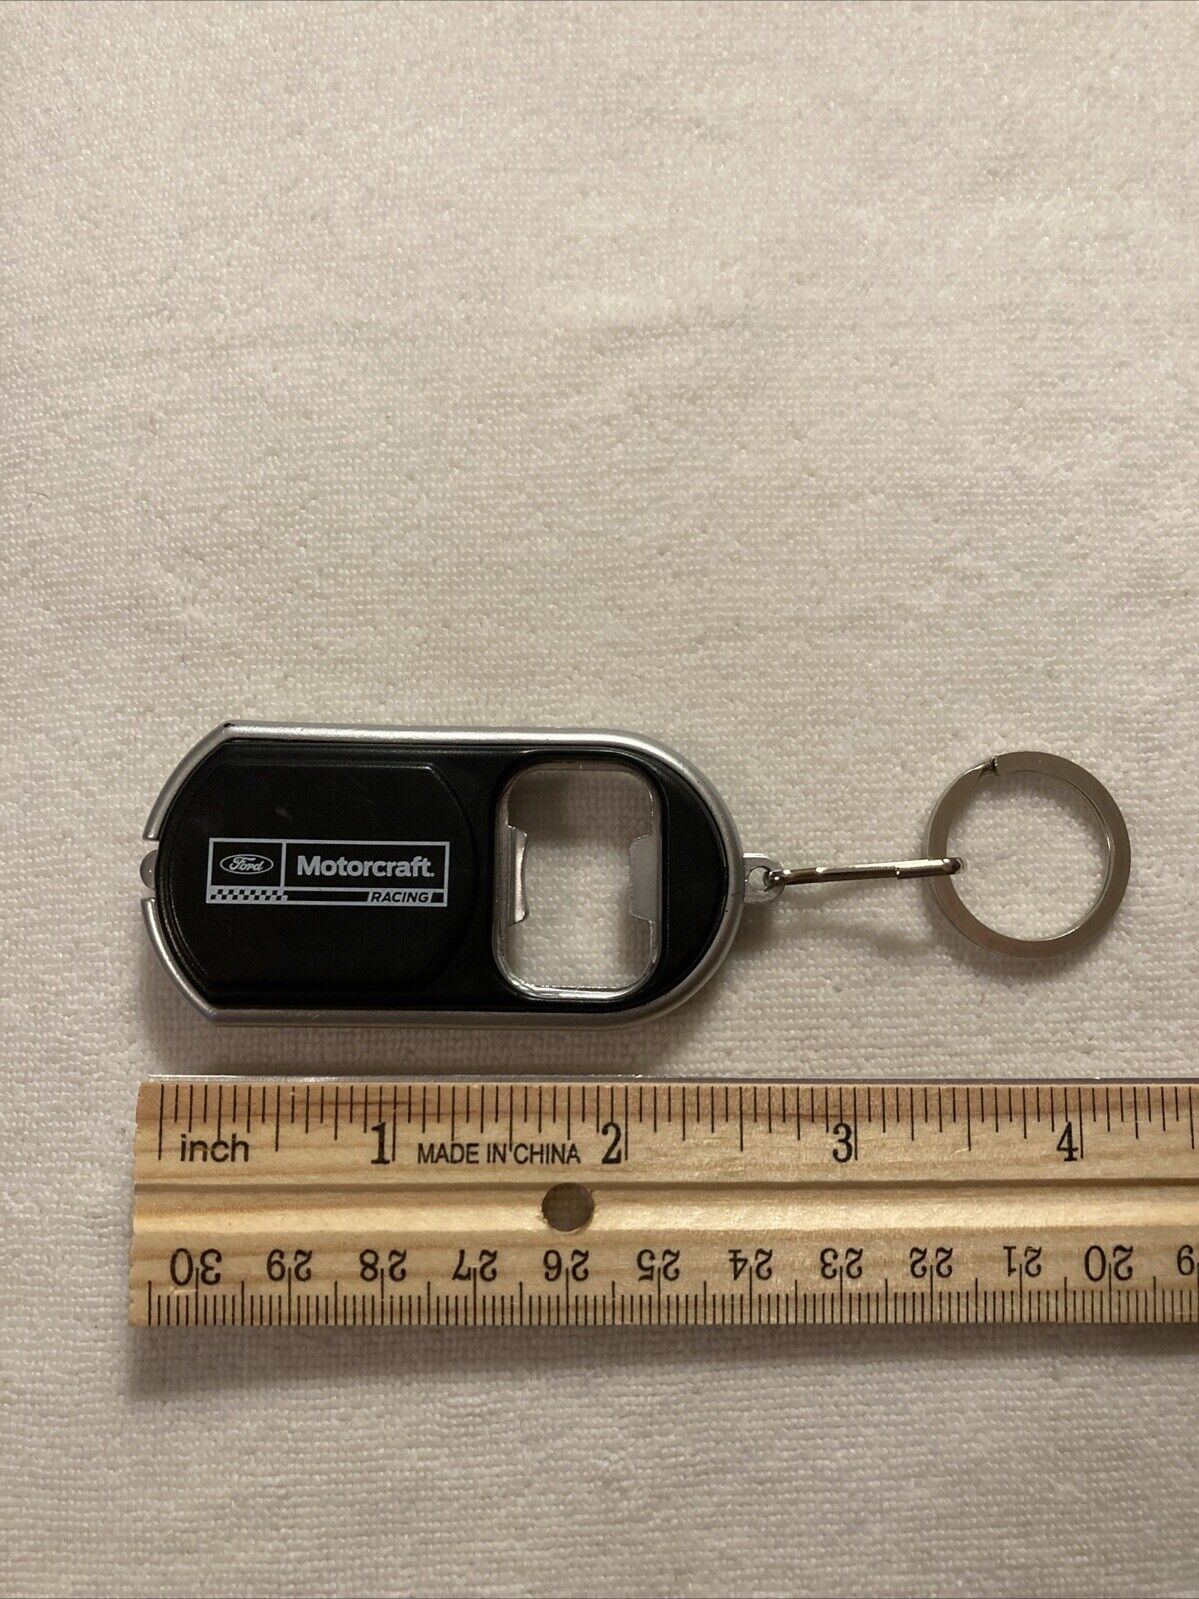 Ford Motorcraft Racing Promotional Bottle Opener Keychain